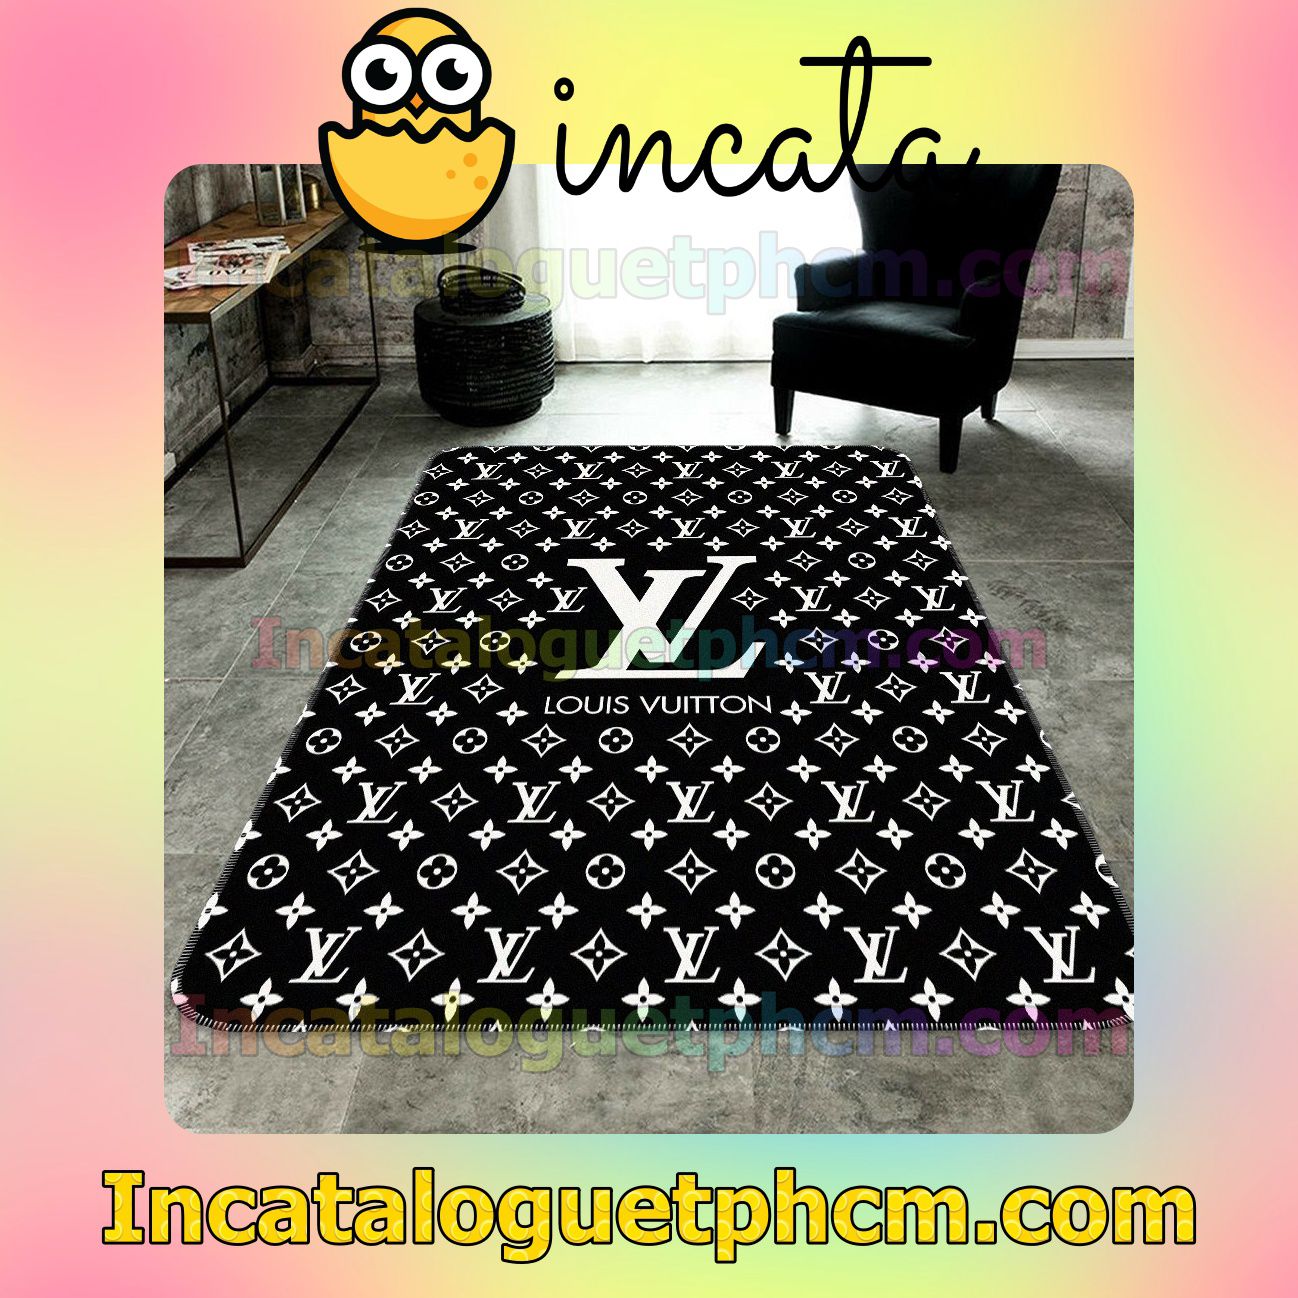 Louis Vuitton Monogram With Big Logo Center Black Carpet Rugs For Kitchen